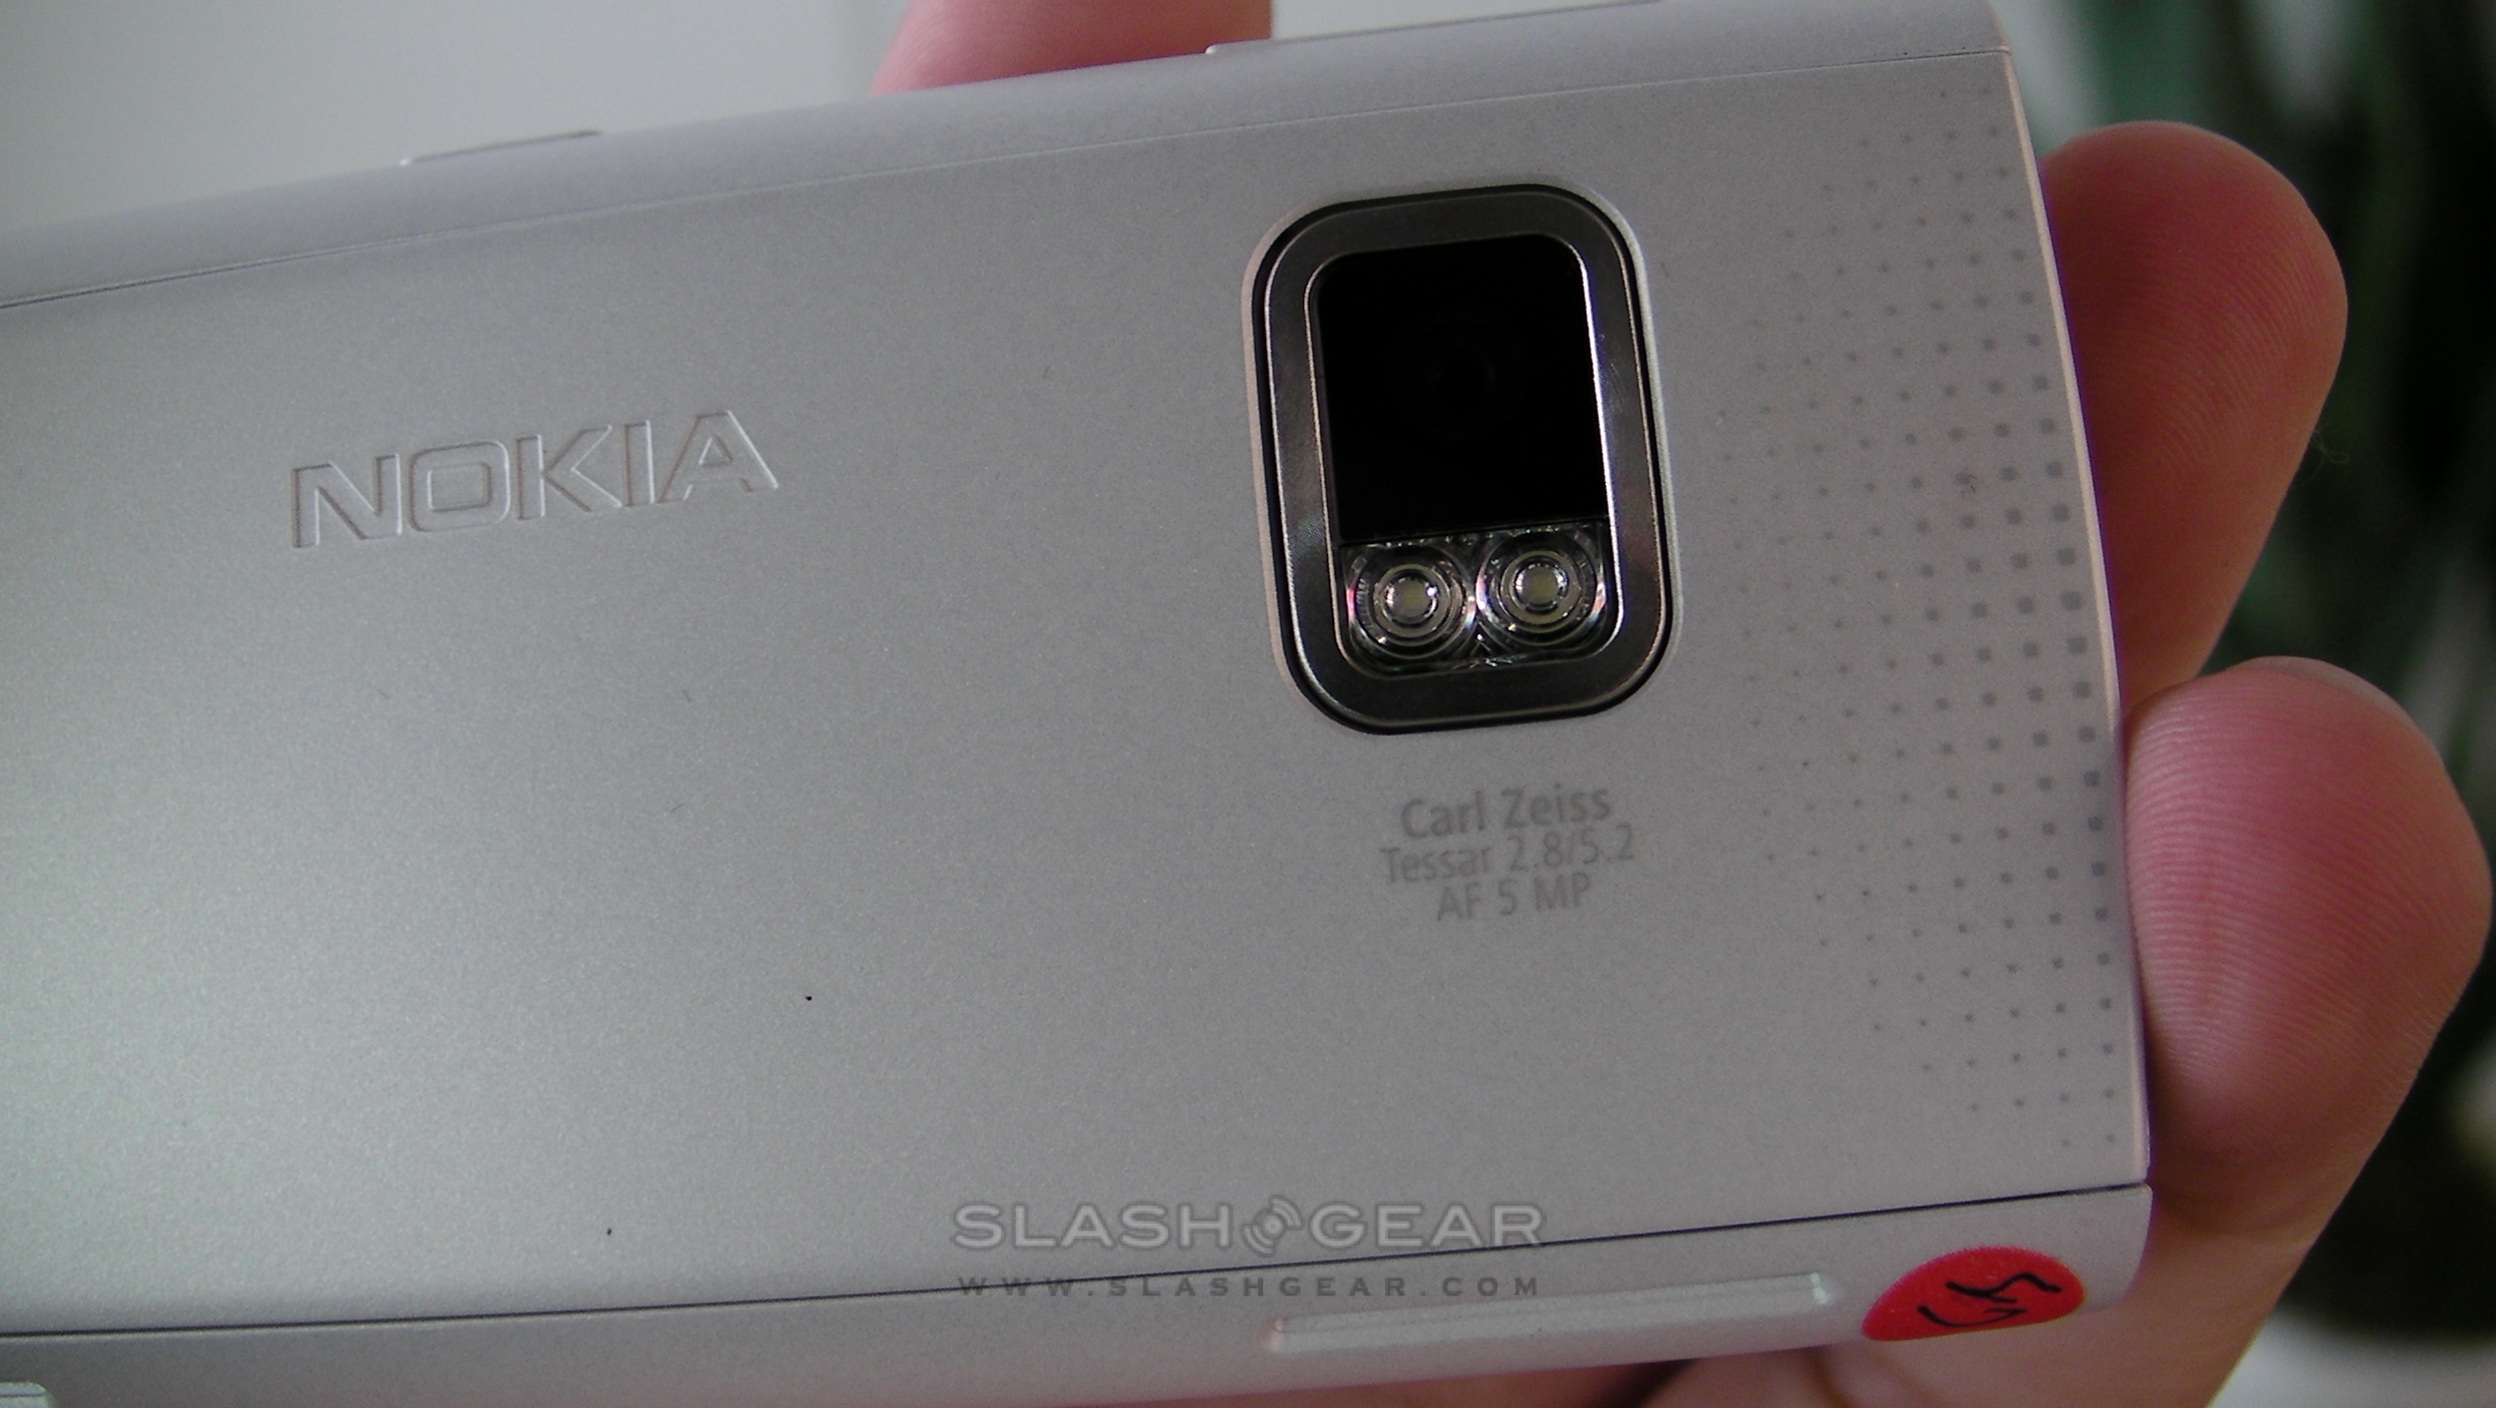 Nokia X6 hands-on [Video]